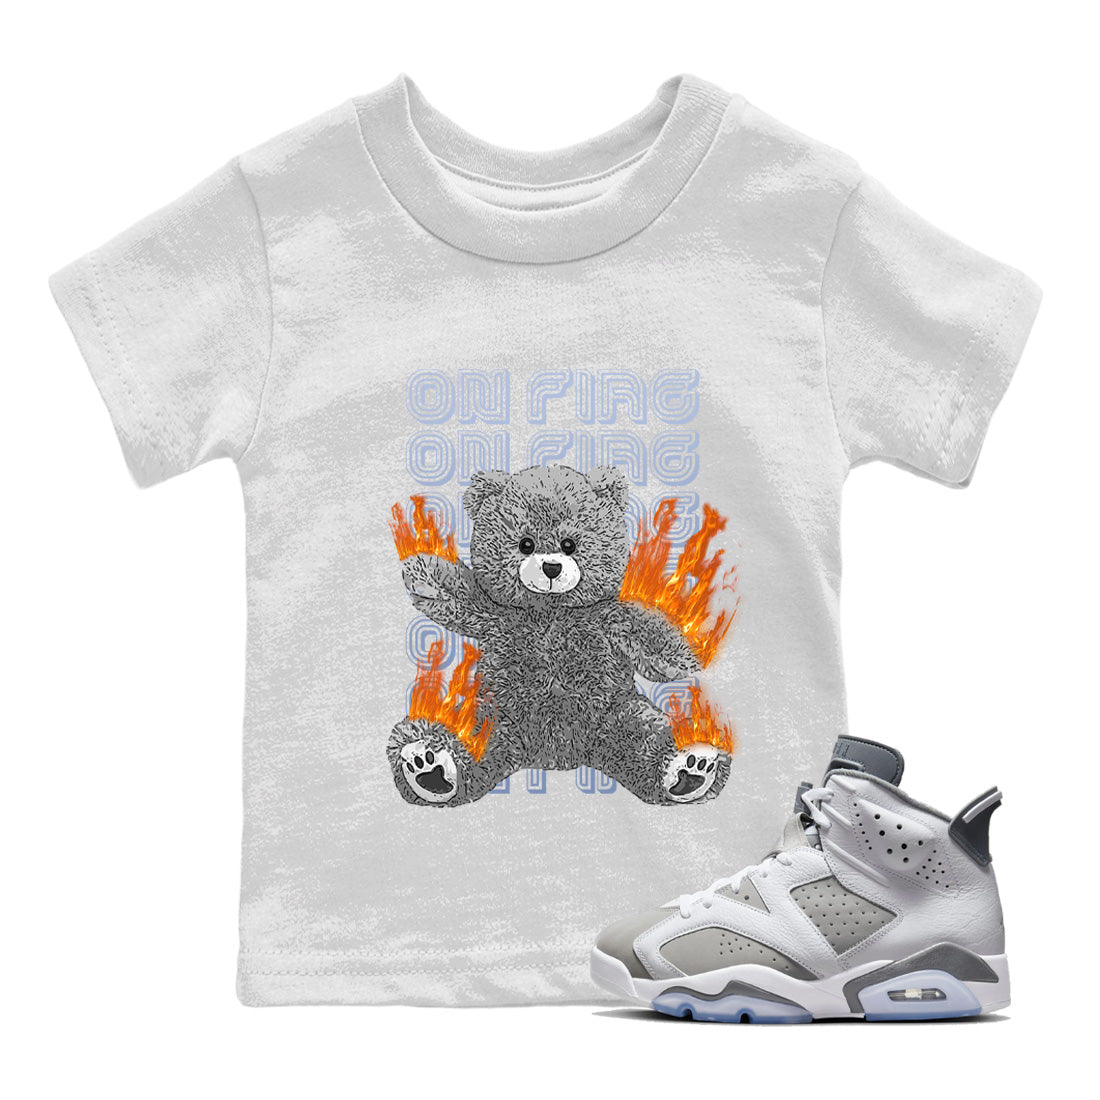 Jordan 6 Cool Grey Sneaker Match Tees On Fire Bear Sneaker Tees Jordan 6 Cool Grey Sneaker Release Tees Kids Shirts